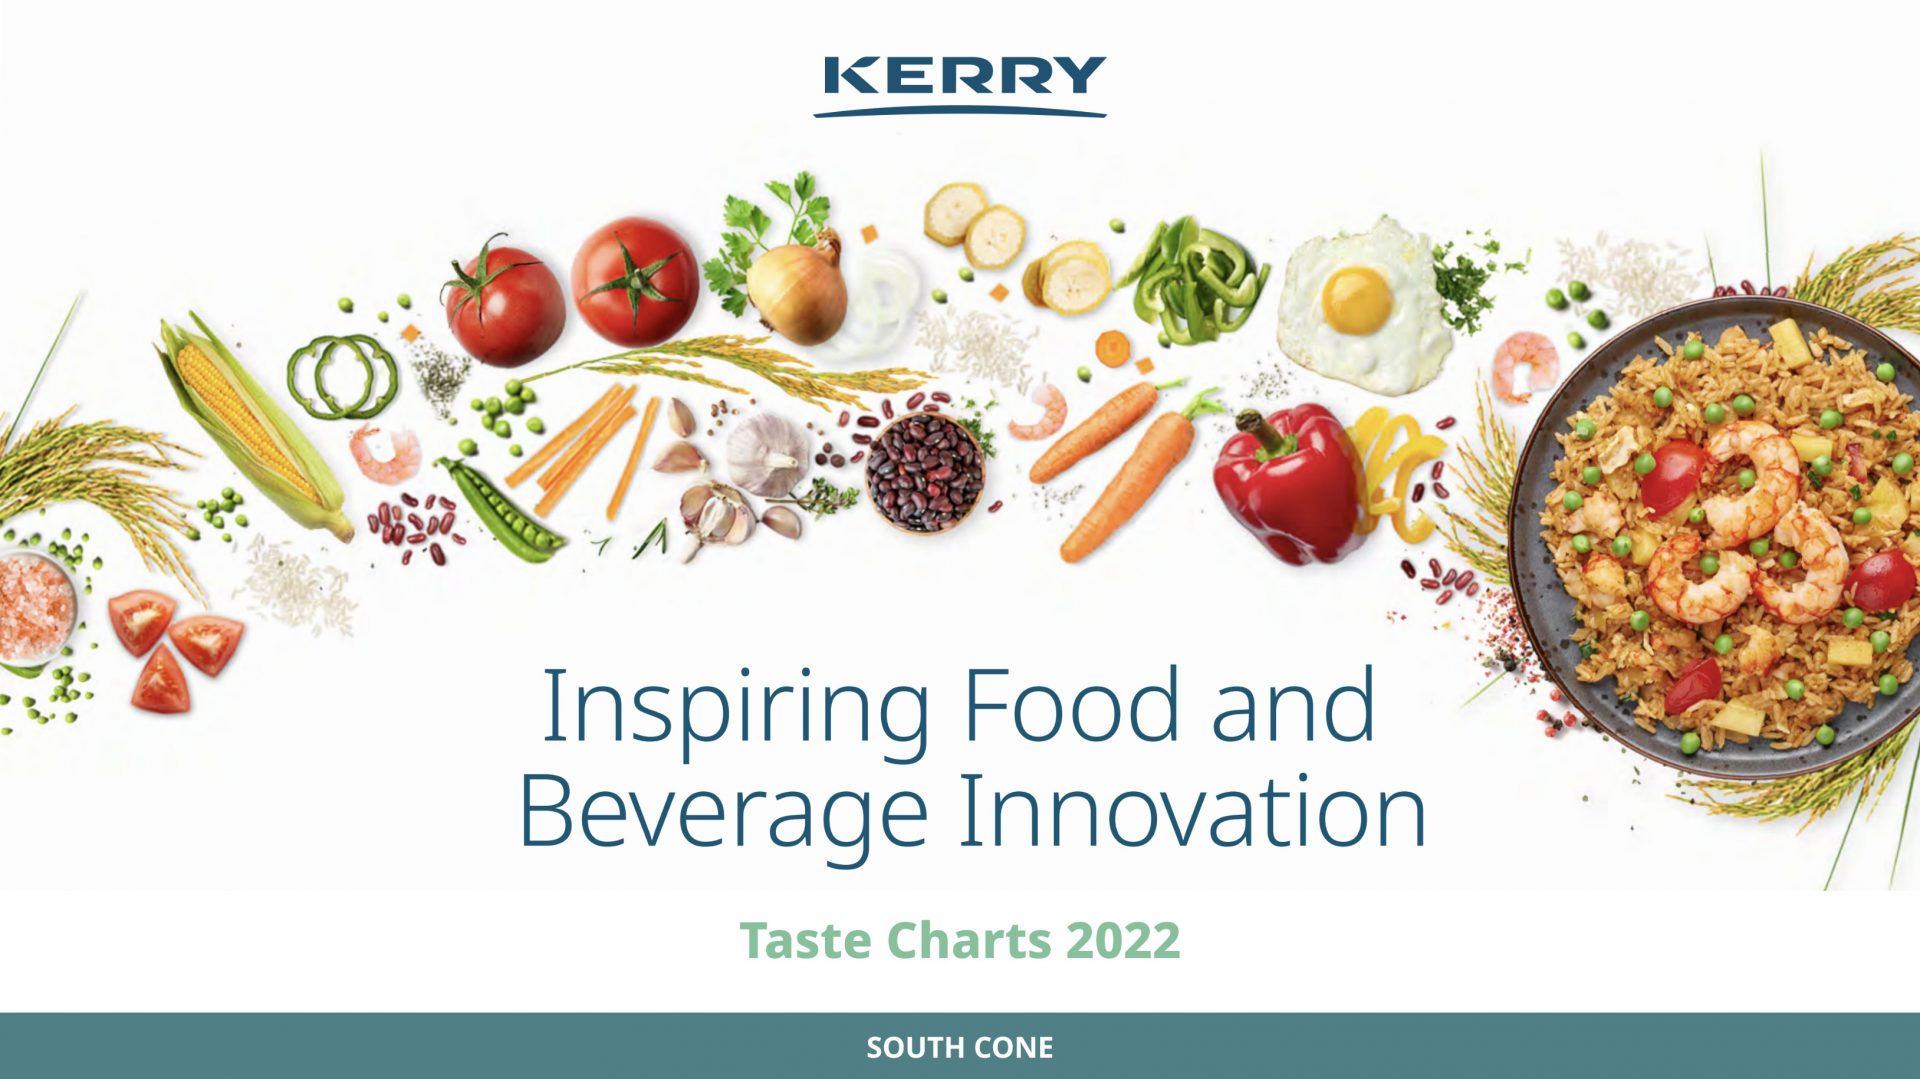 Kerry Taste Charts 2022